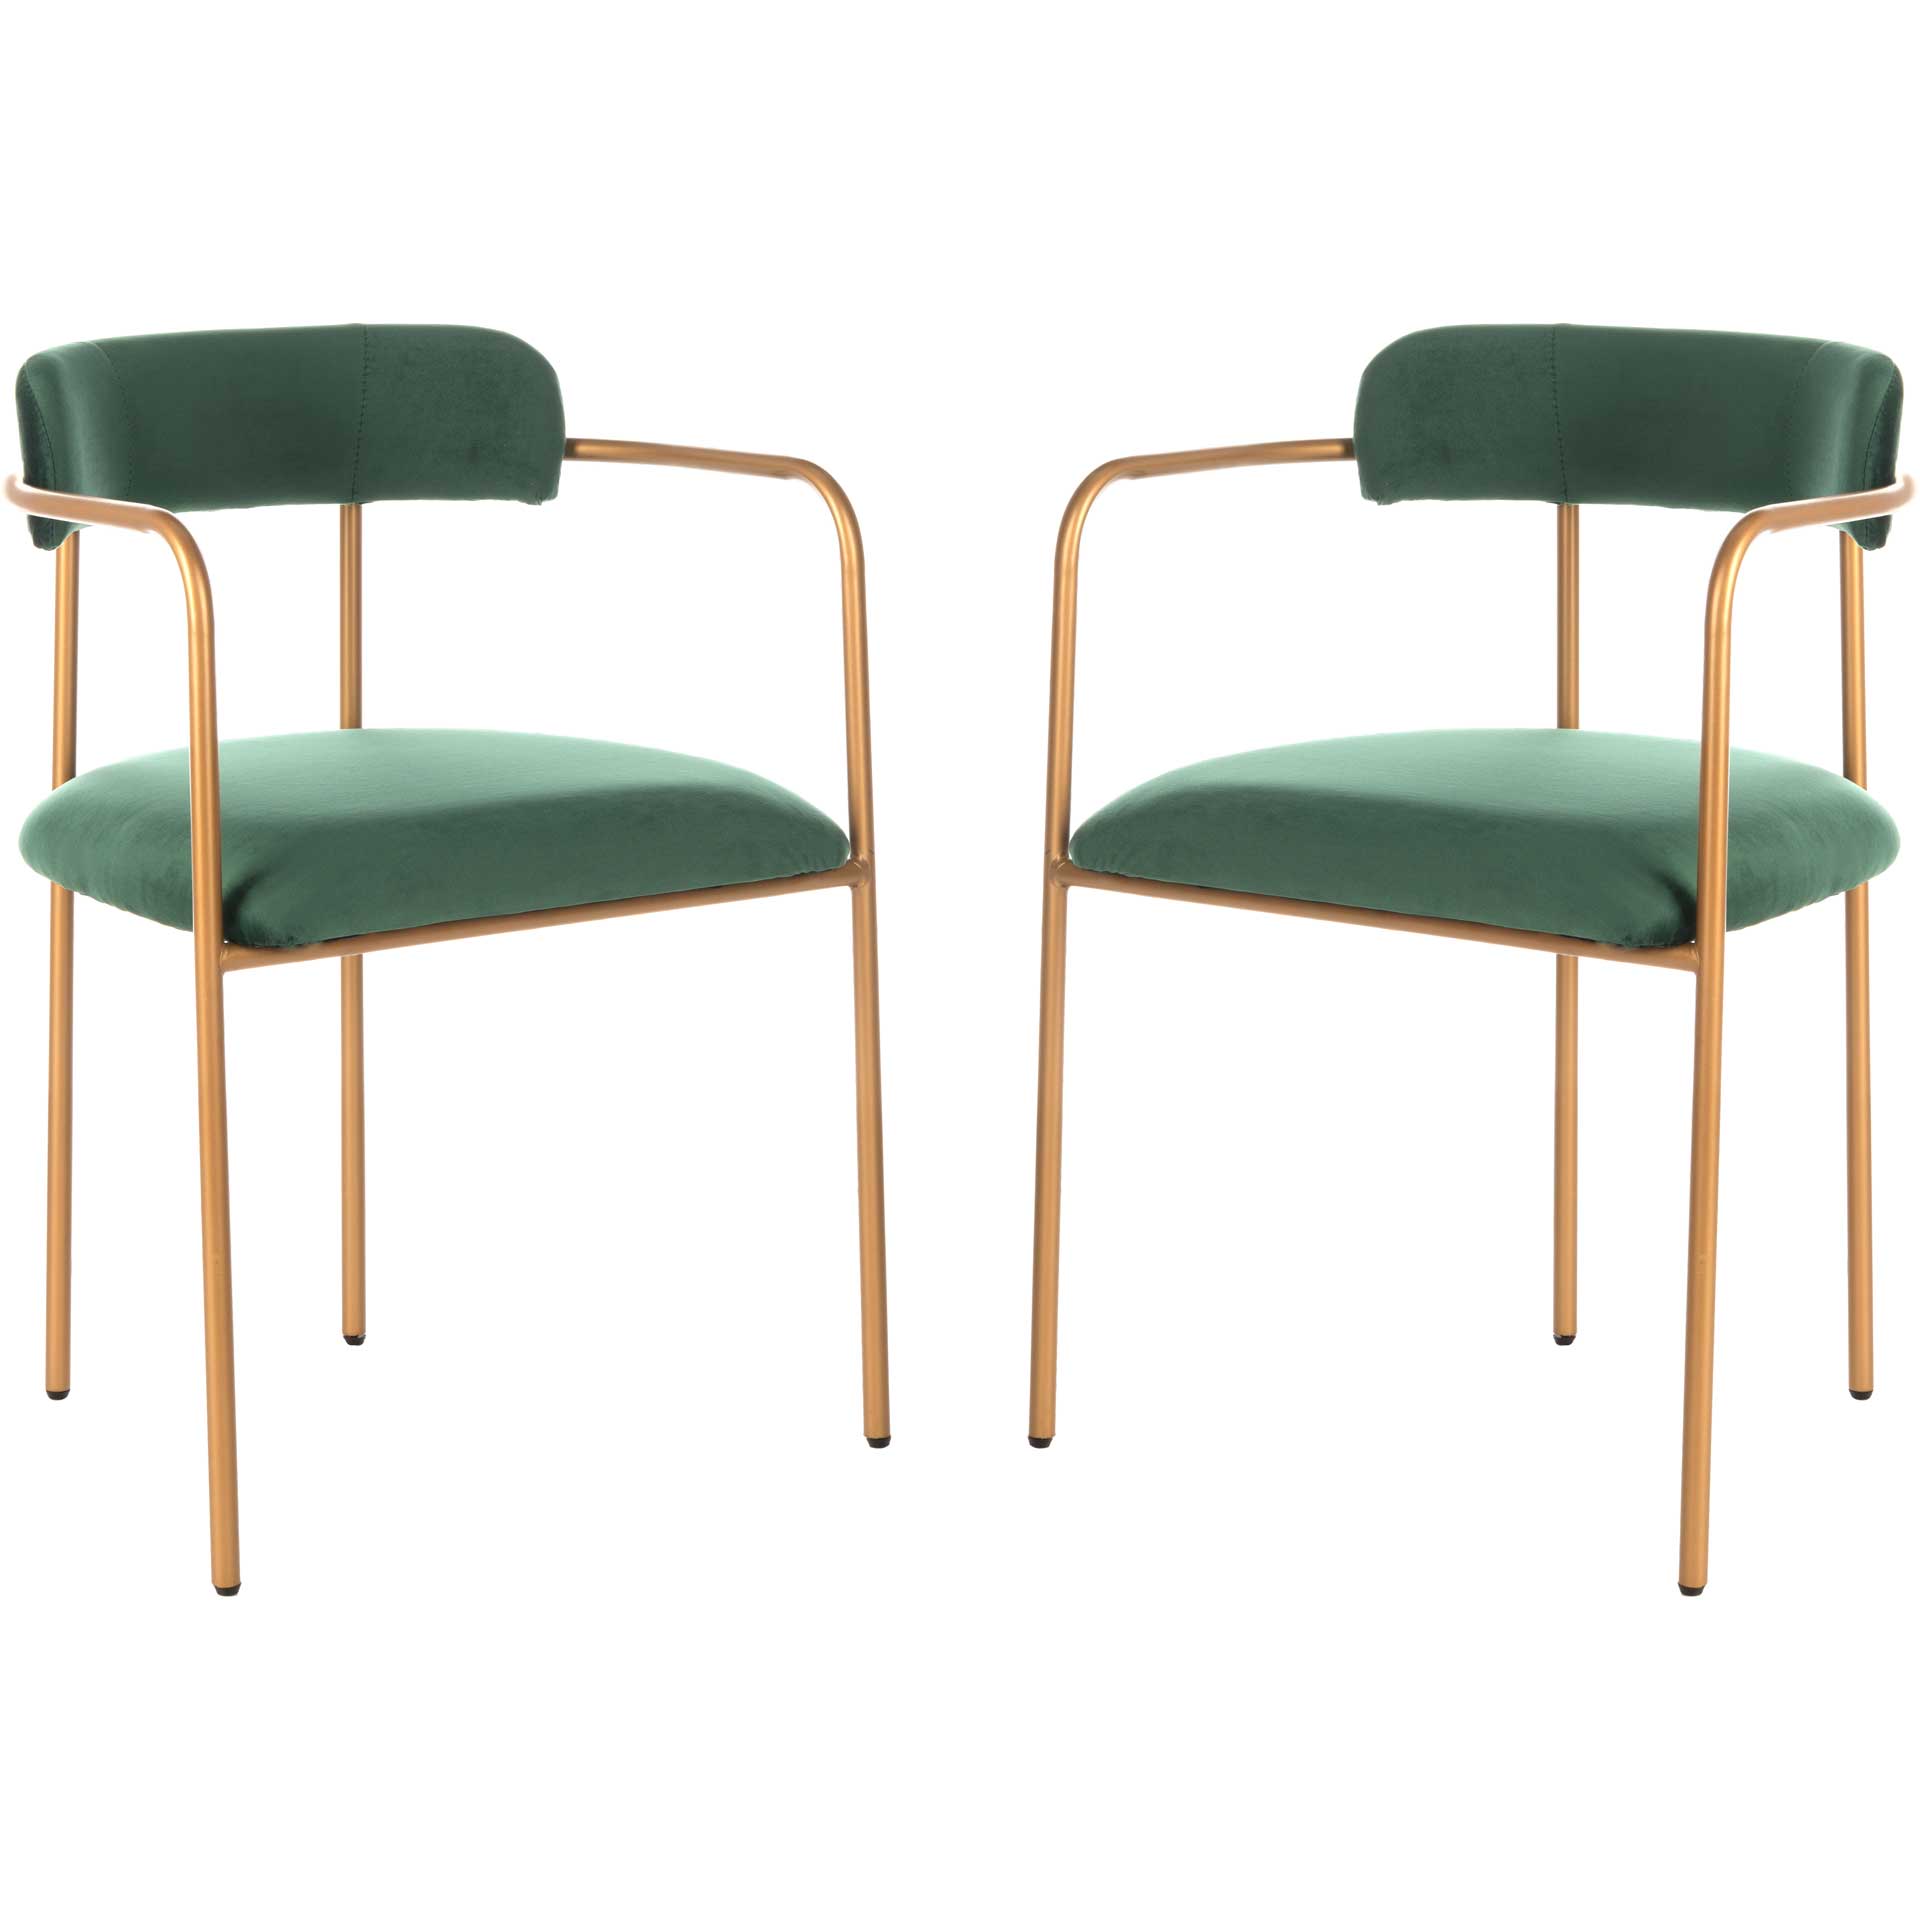 Callahan Side Chair Malachite Green/Gold (Set of 2)